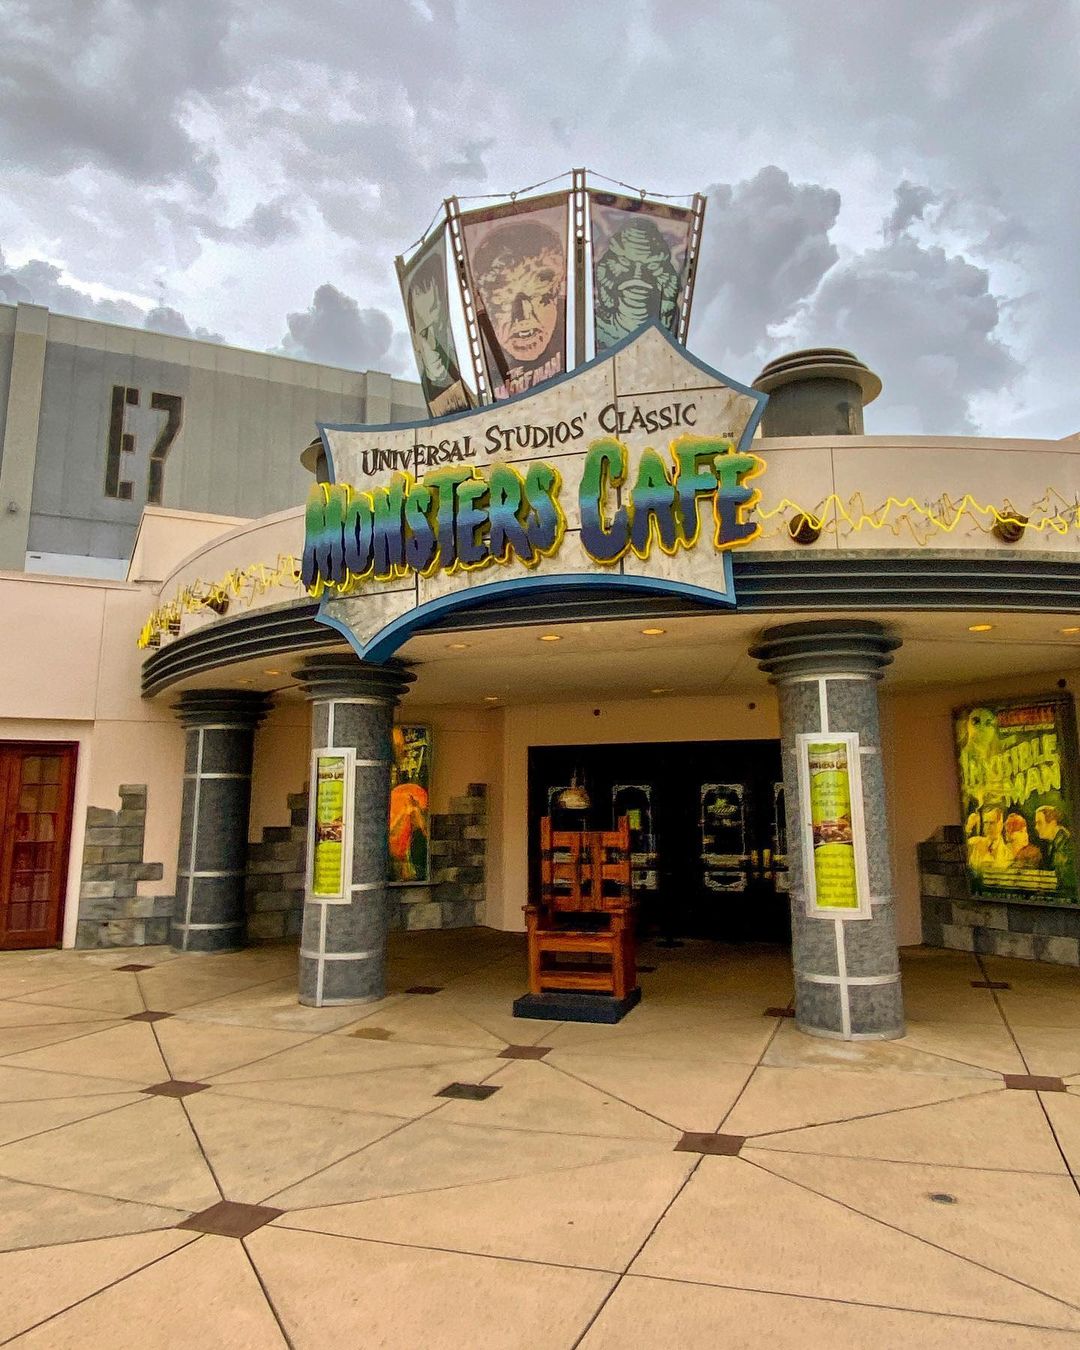 Classic Monsters Cafe - Restaurante de Universal Studios